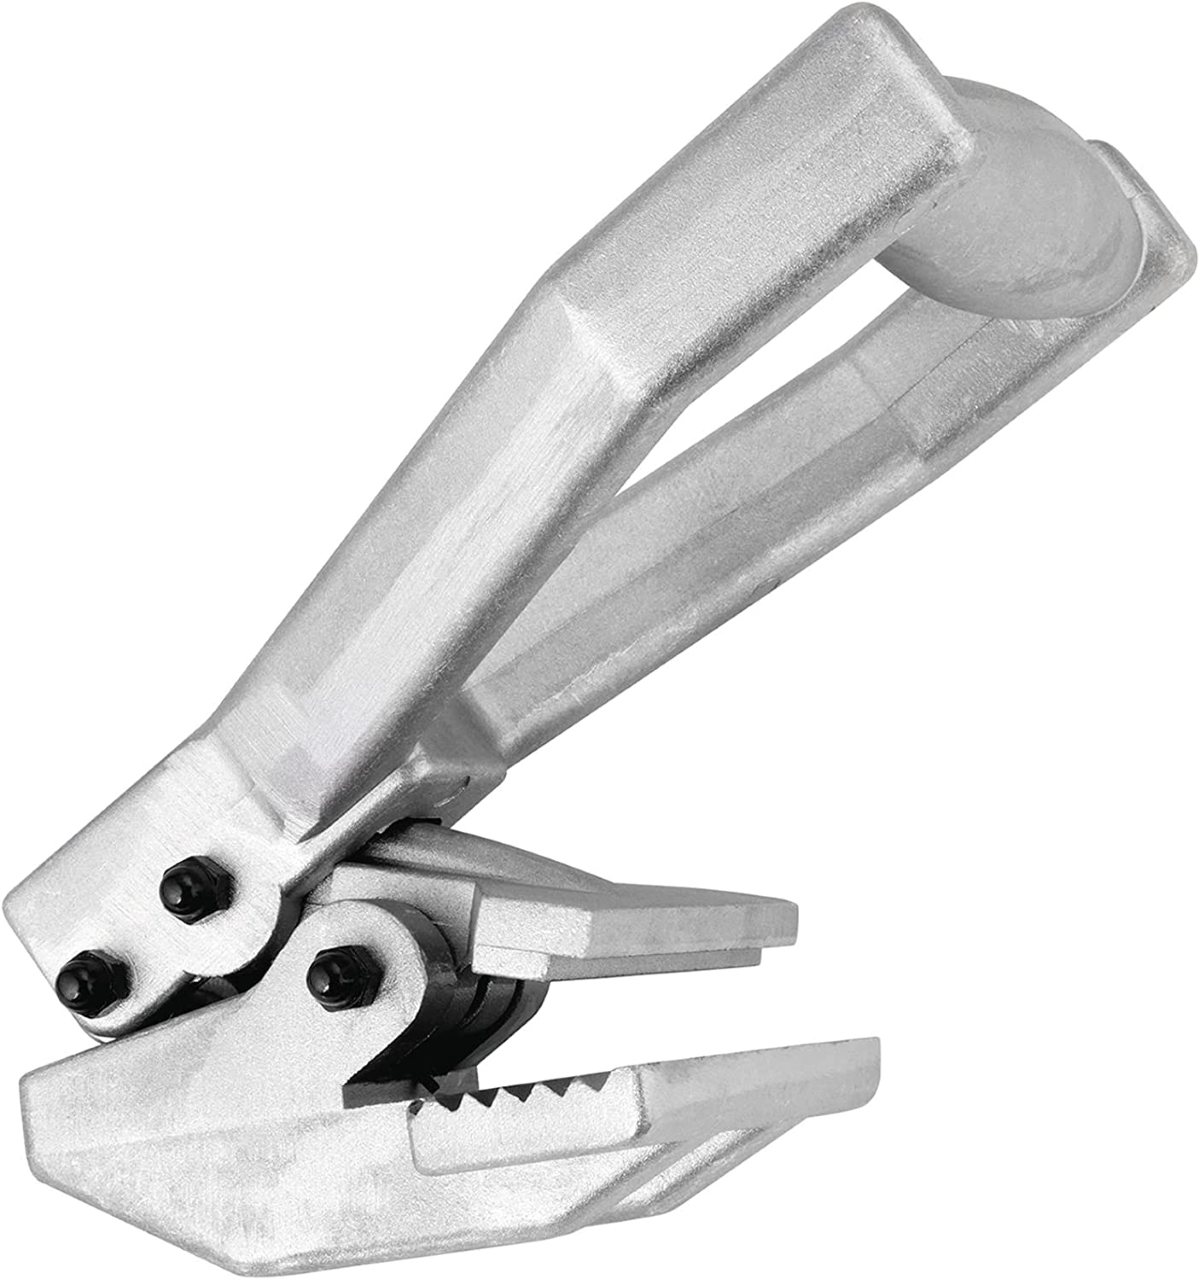 demolition tools - silver carpet puller